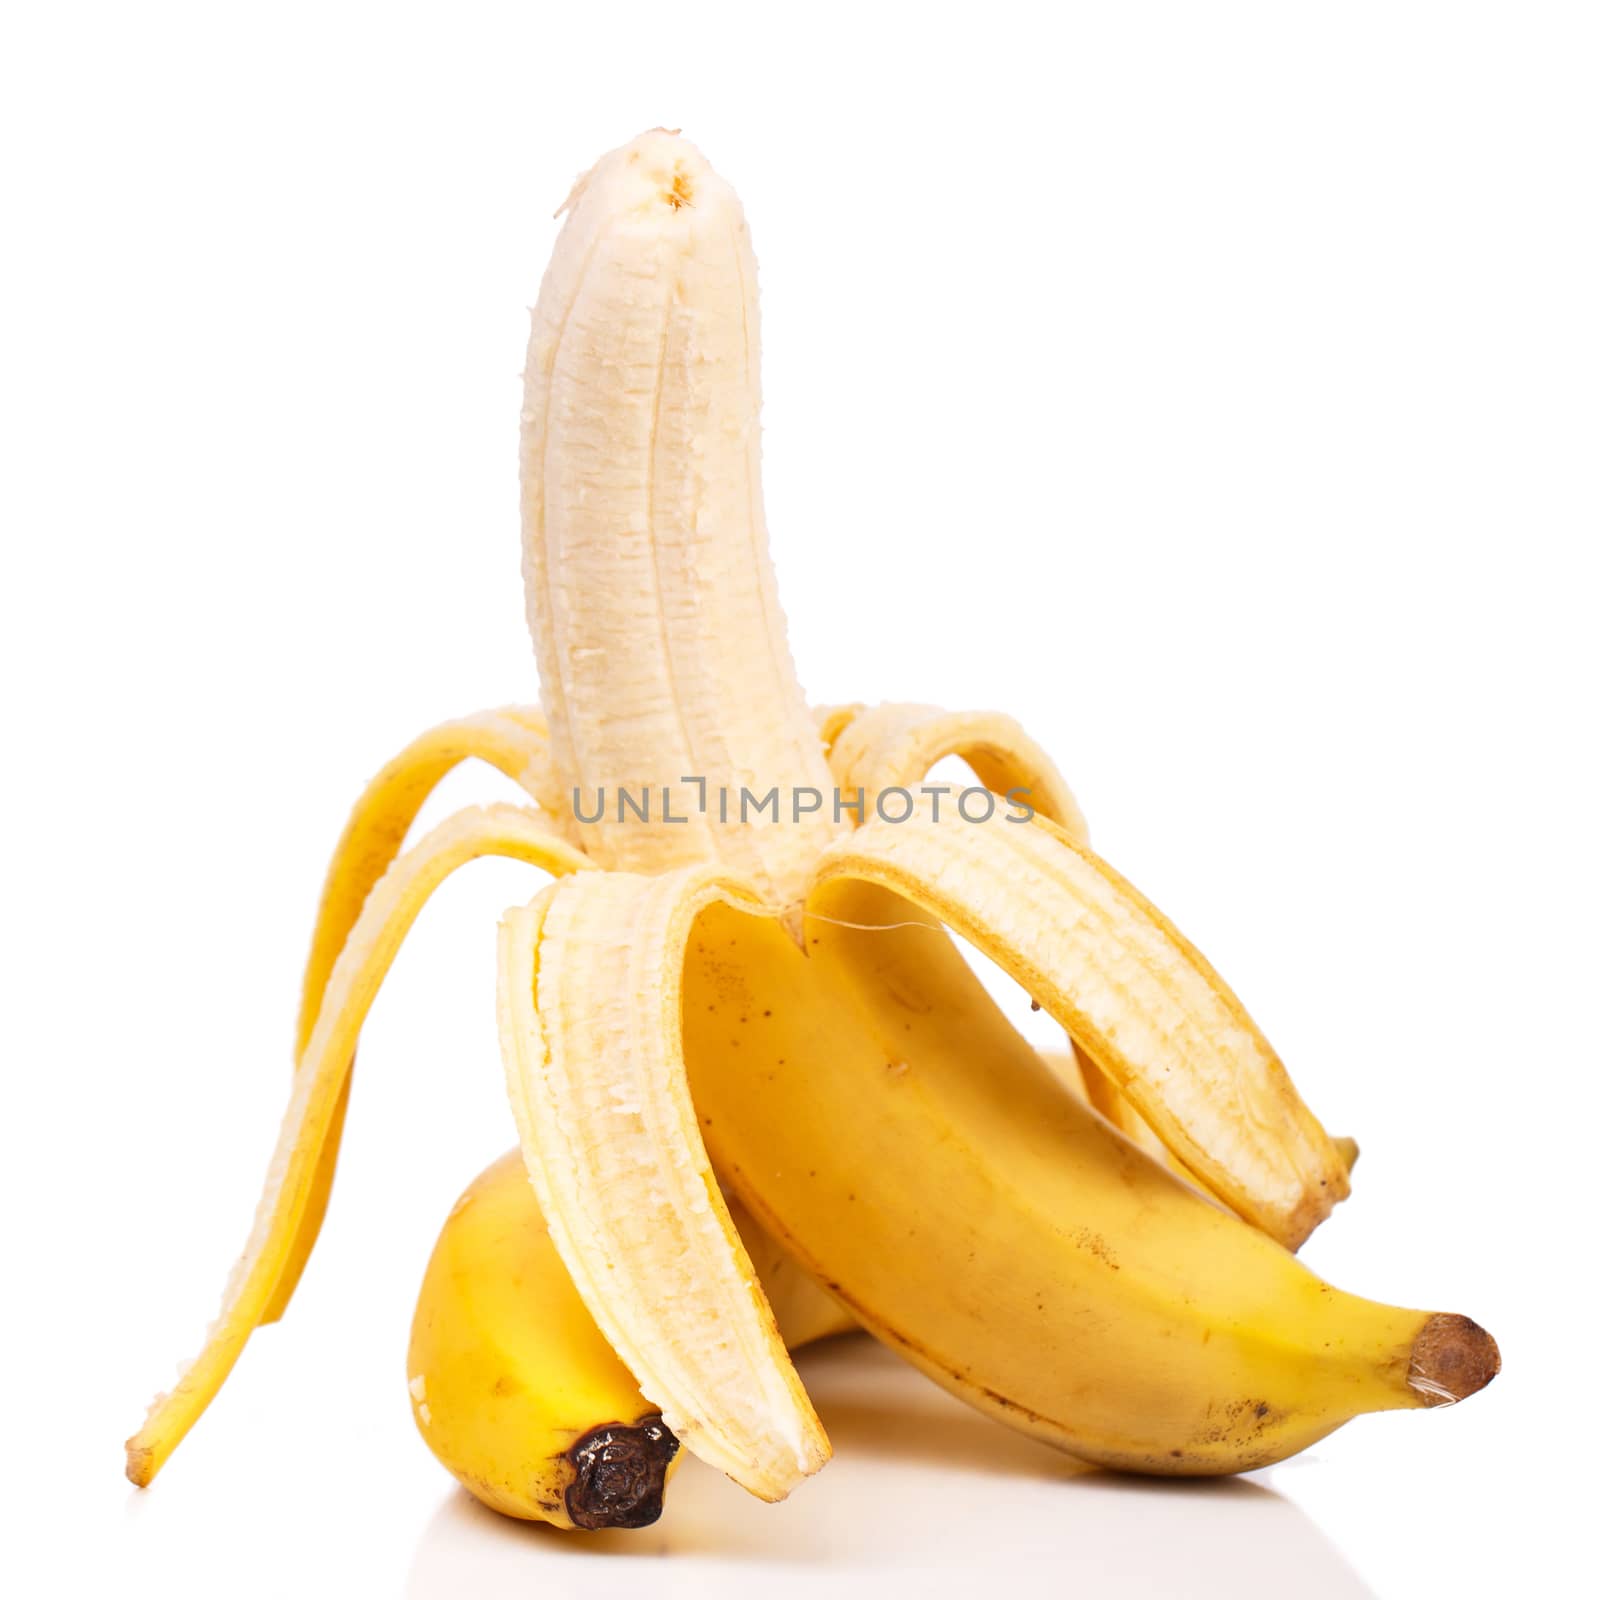 Delicious banana by rufatjumali